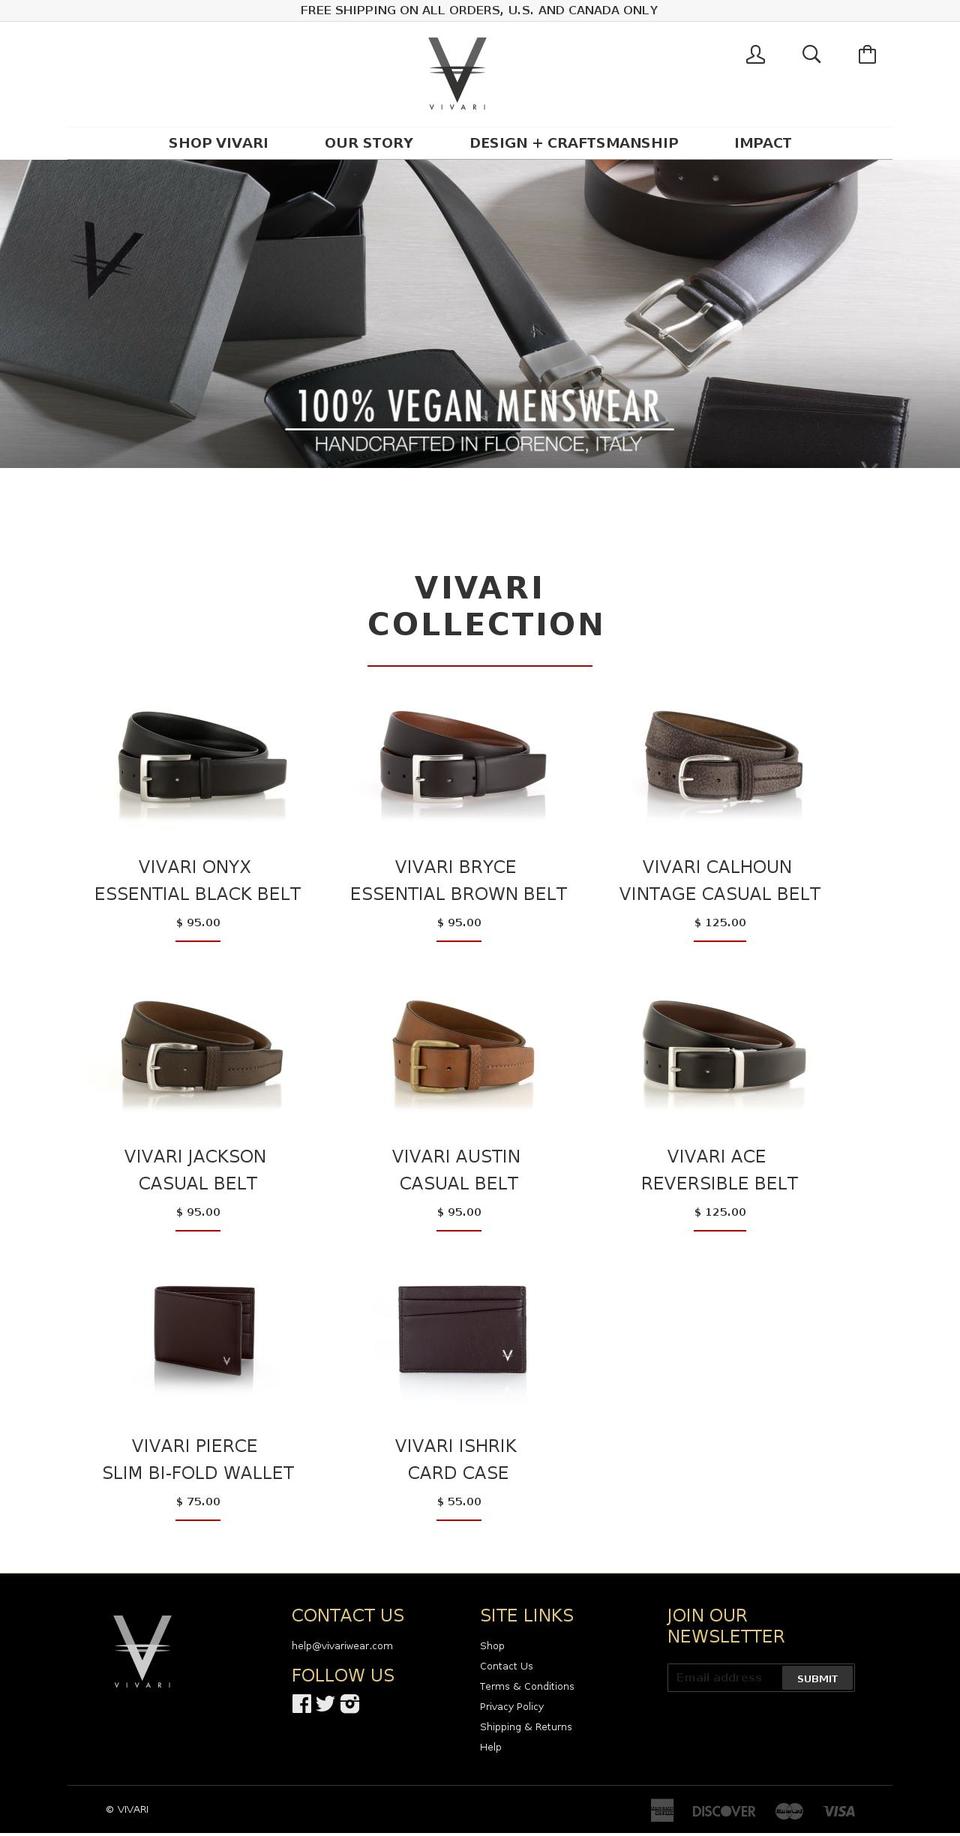 vivariwear.com shopify website screenshot